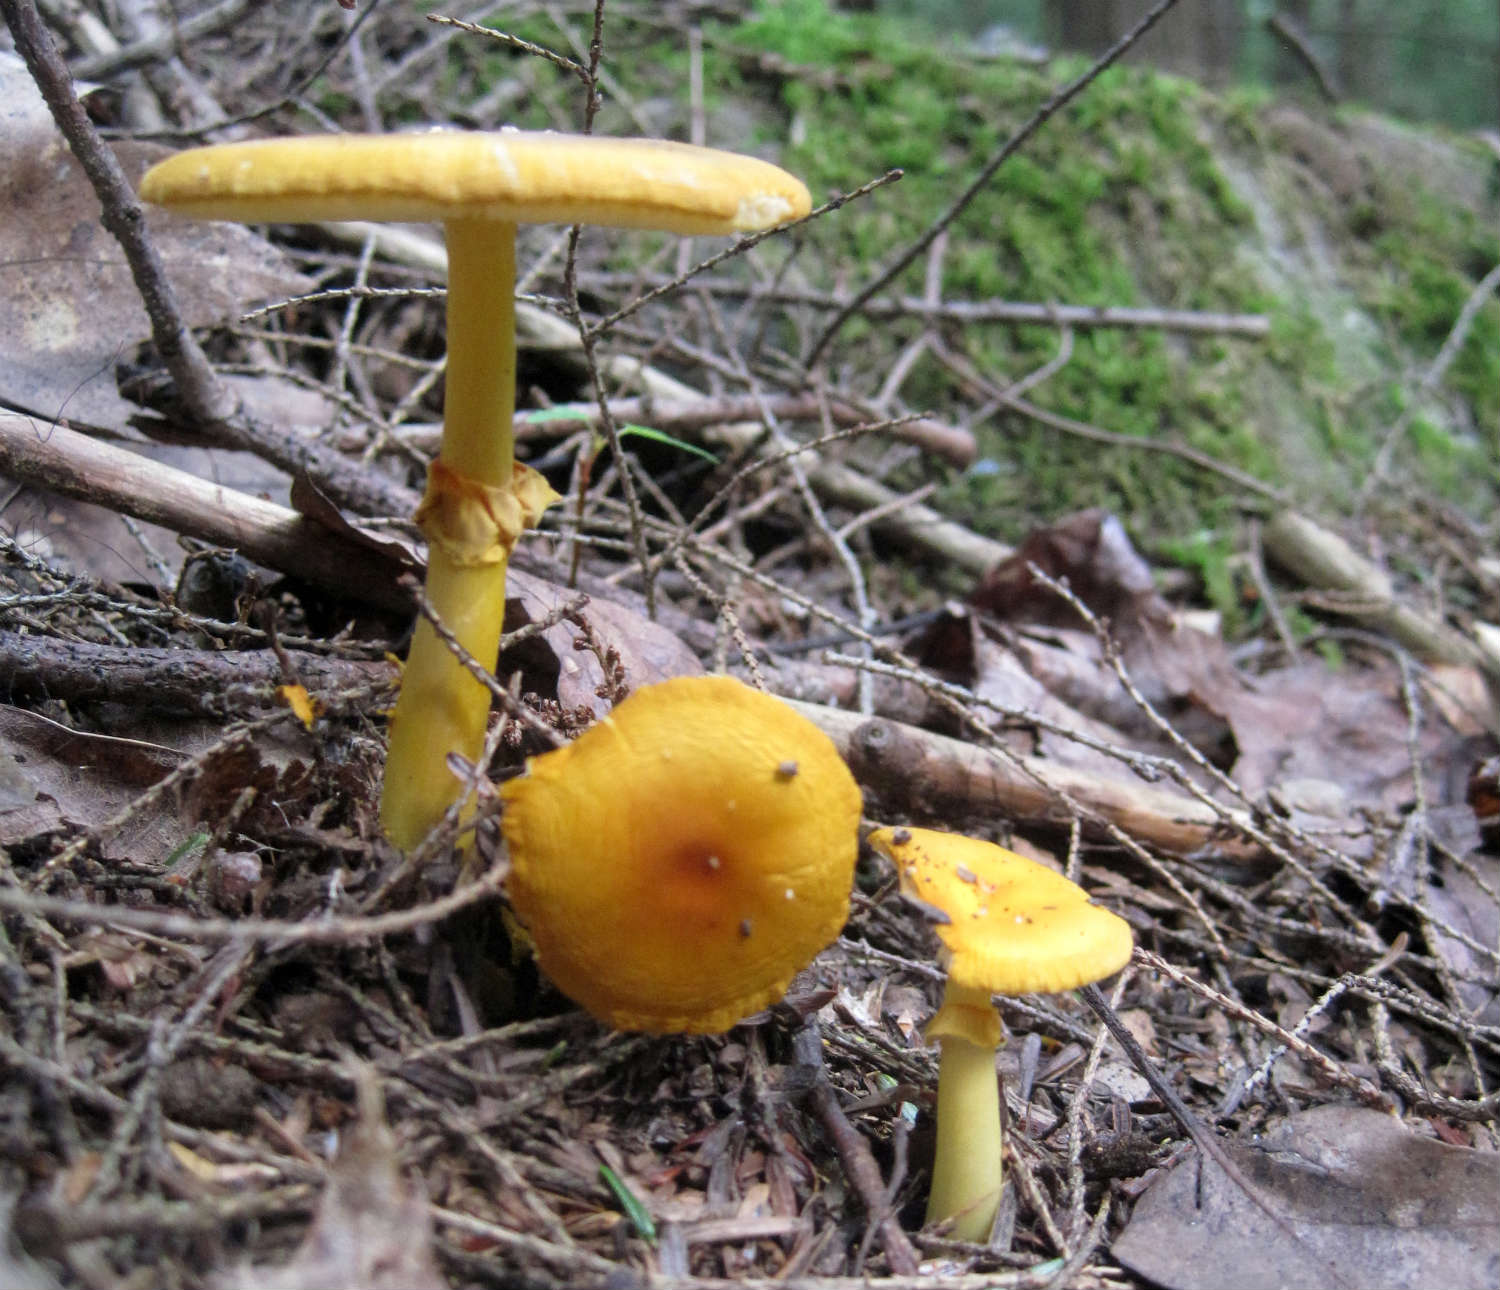 EEM fungi like this Amanita mushroom help soils store more carbon (Colin Averill)